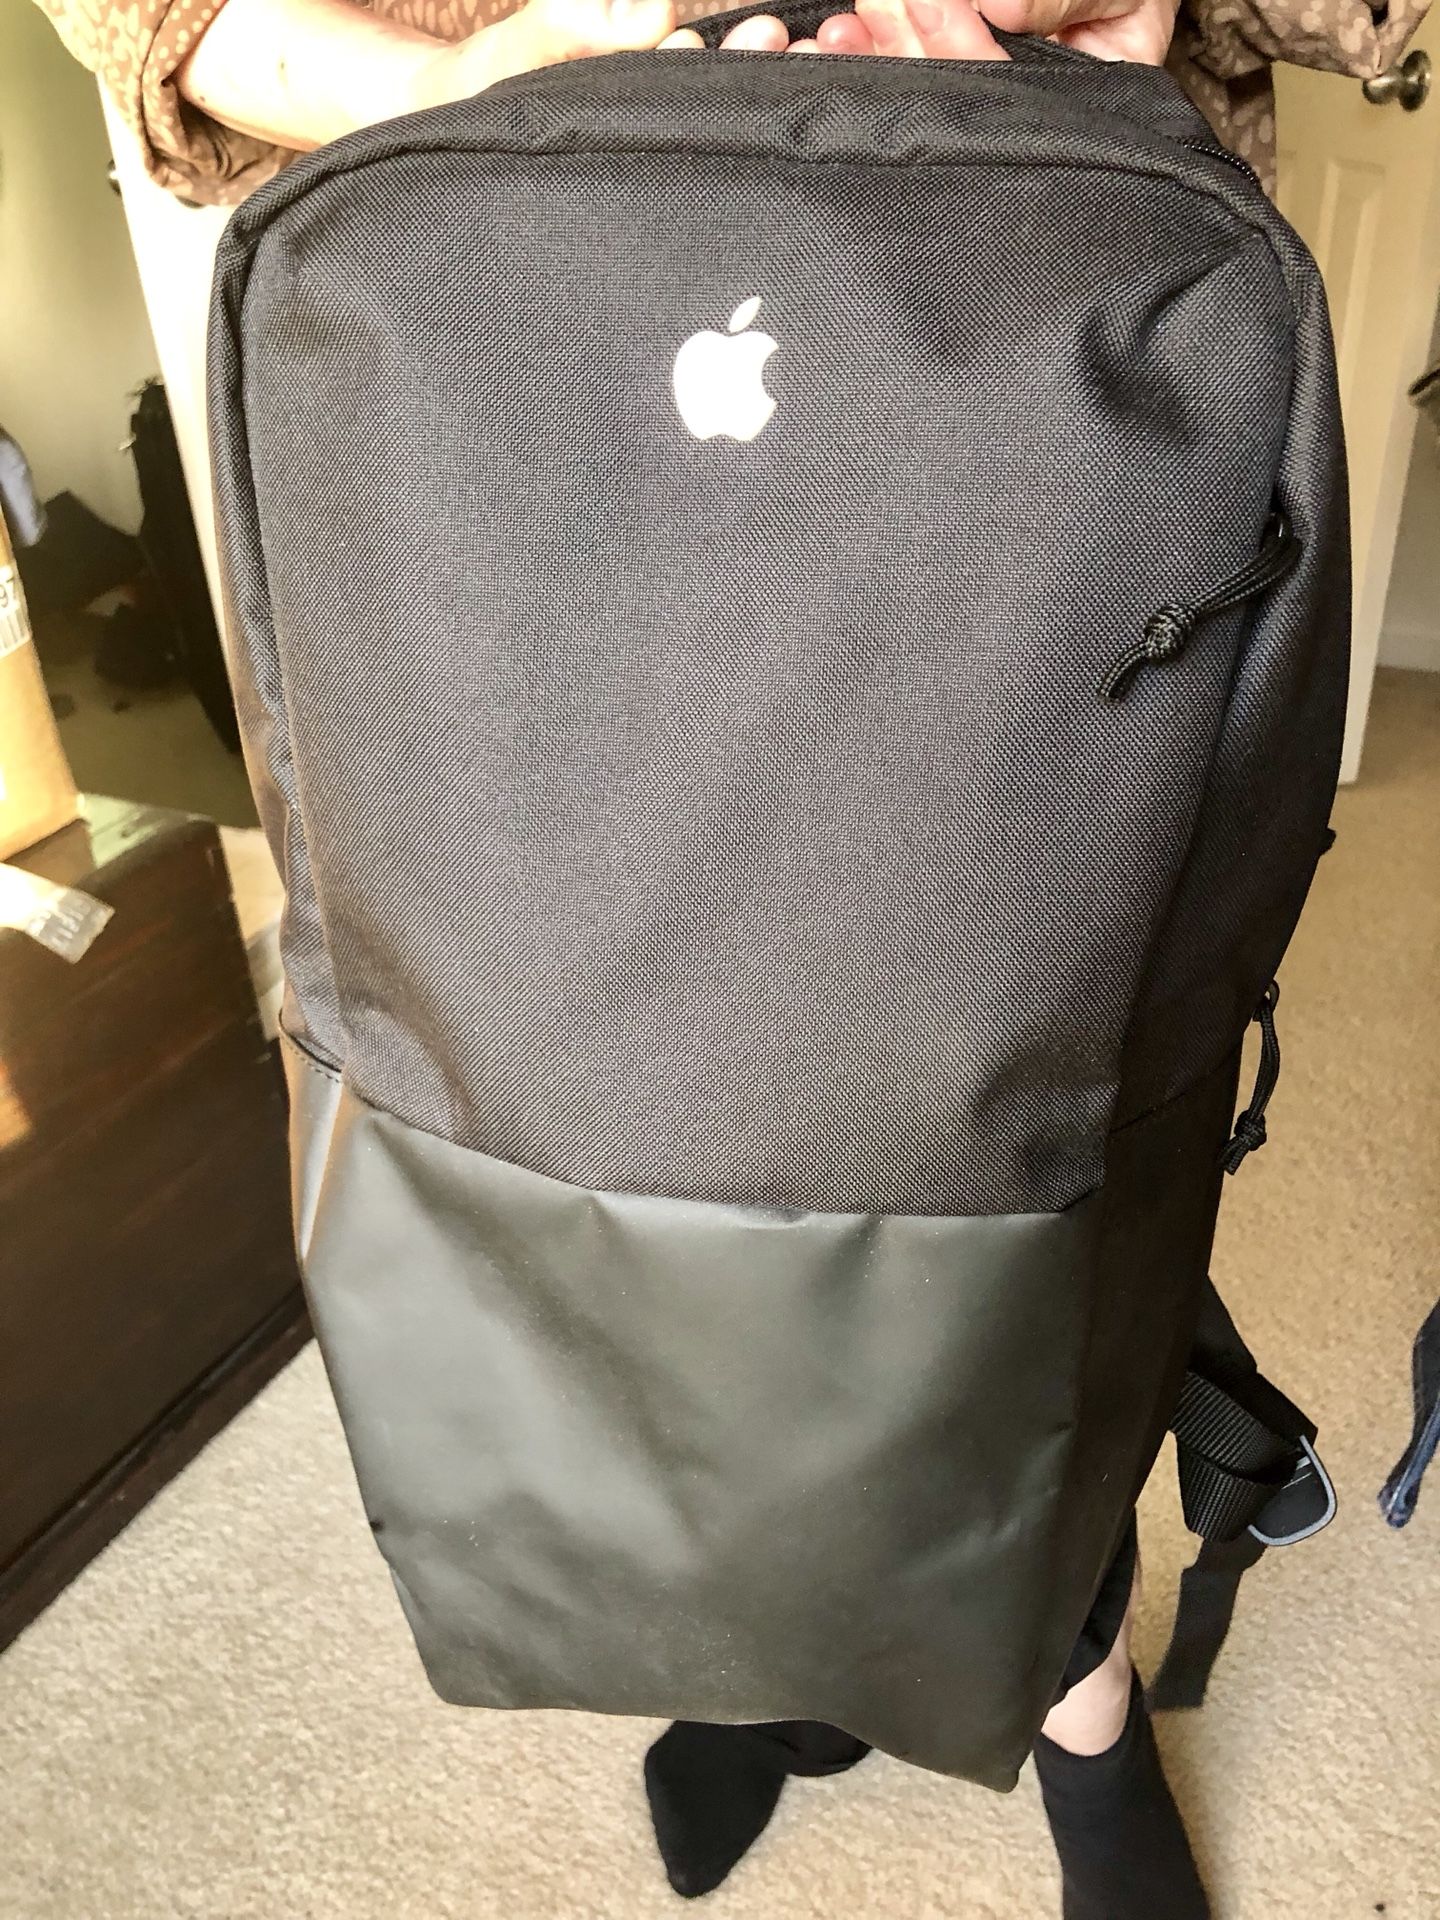 “InCase” Apple backpack